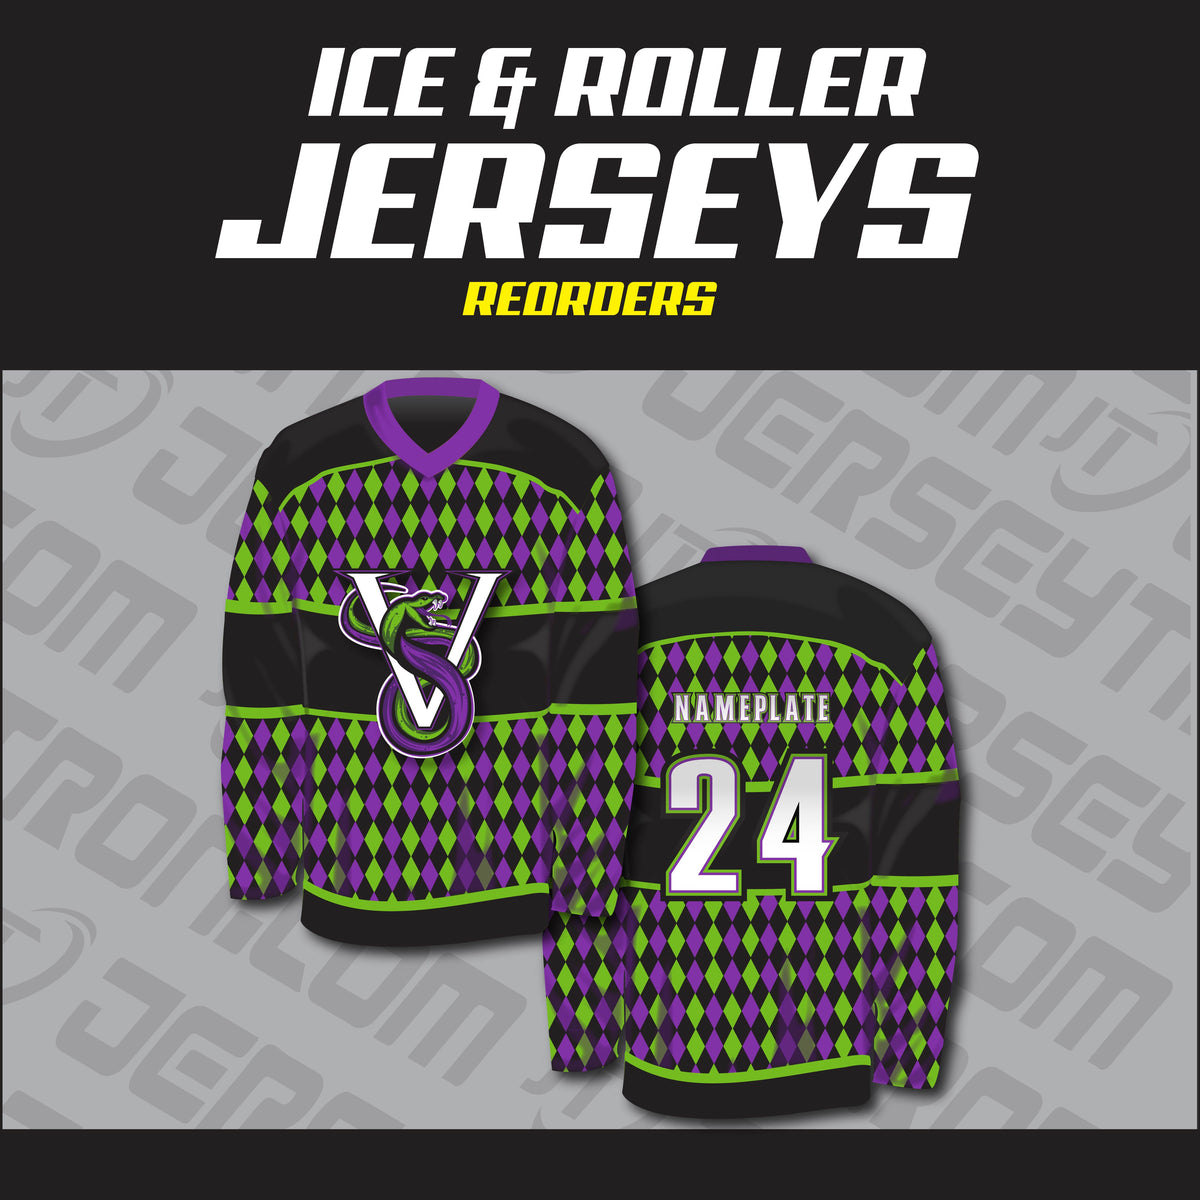 White/Black Ice Roller Hockey Jerseys Custom Design